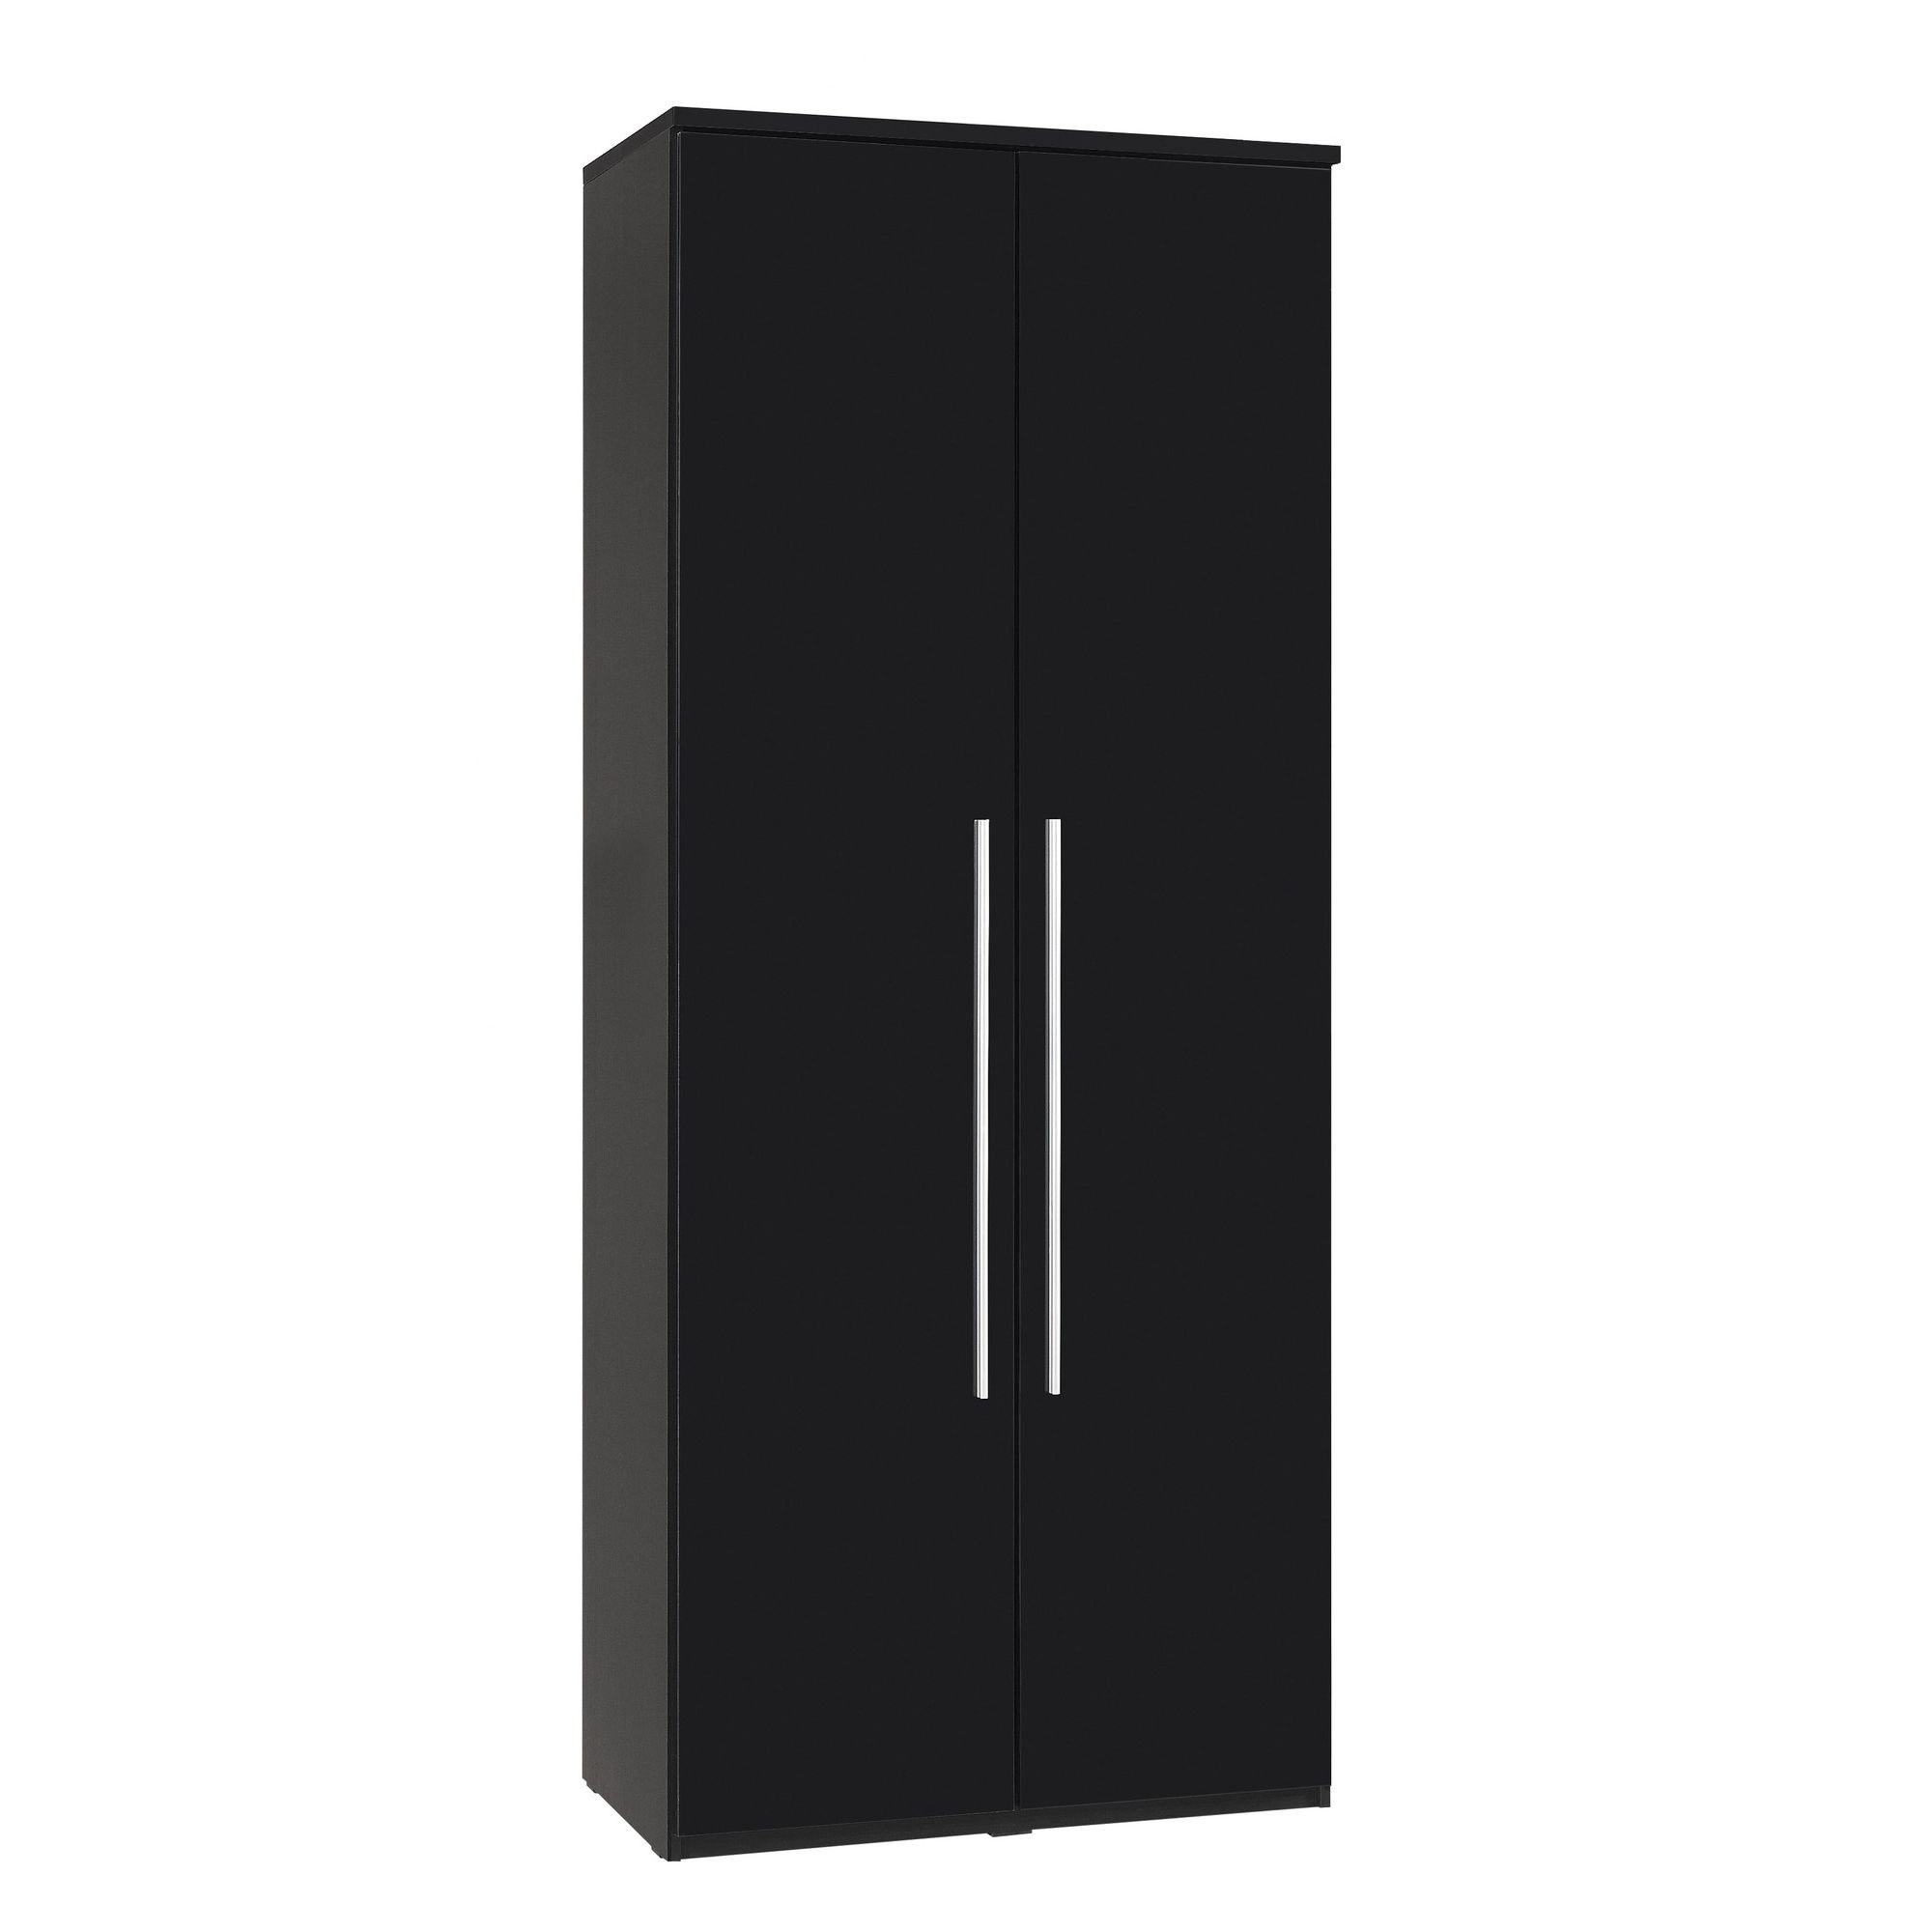 Urbane Designs Romain Two Door Wardrobe in Black and High Gloss Black at Tesco Direct